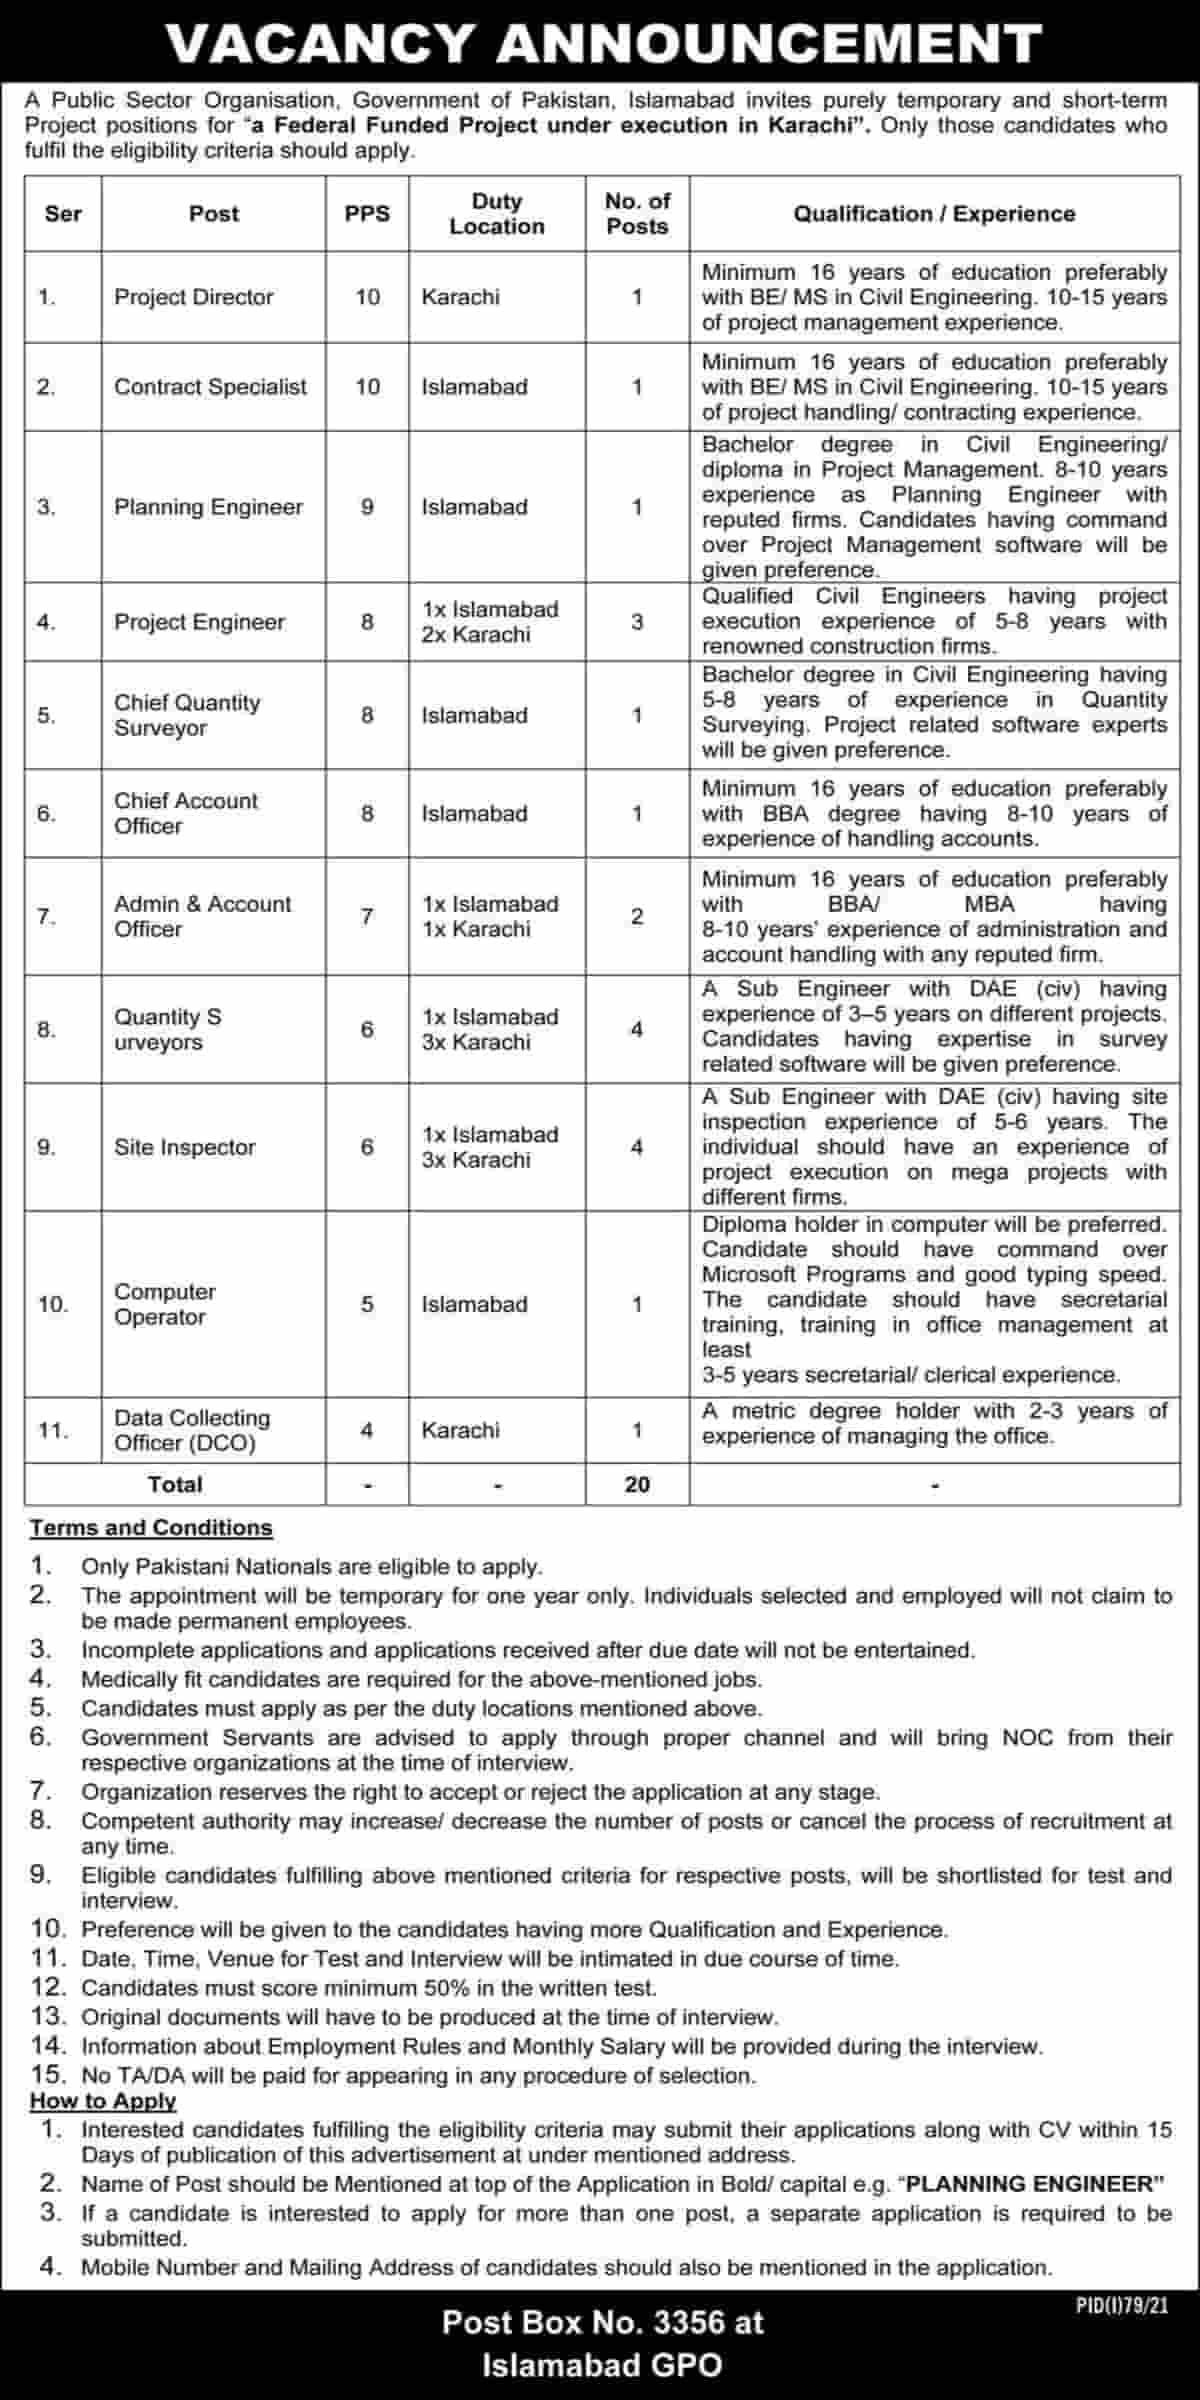 PO Box 3356 Islamabad GPO Public Sector Organization Jobs 2021 Application Form